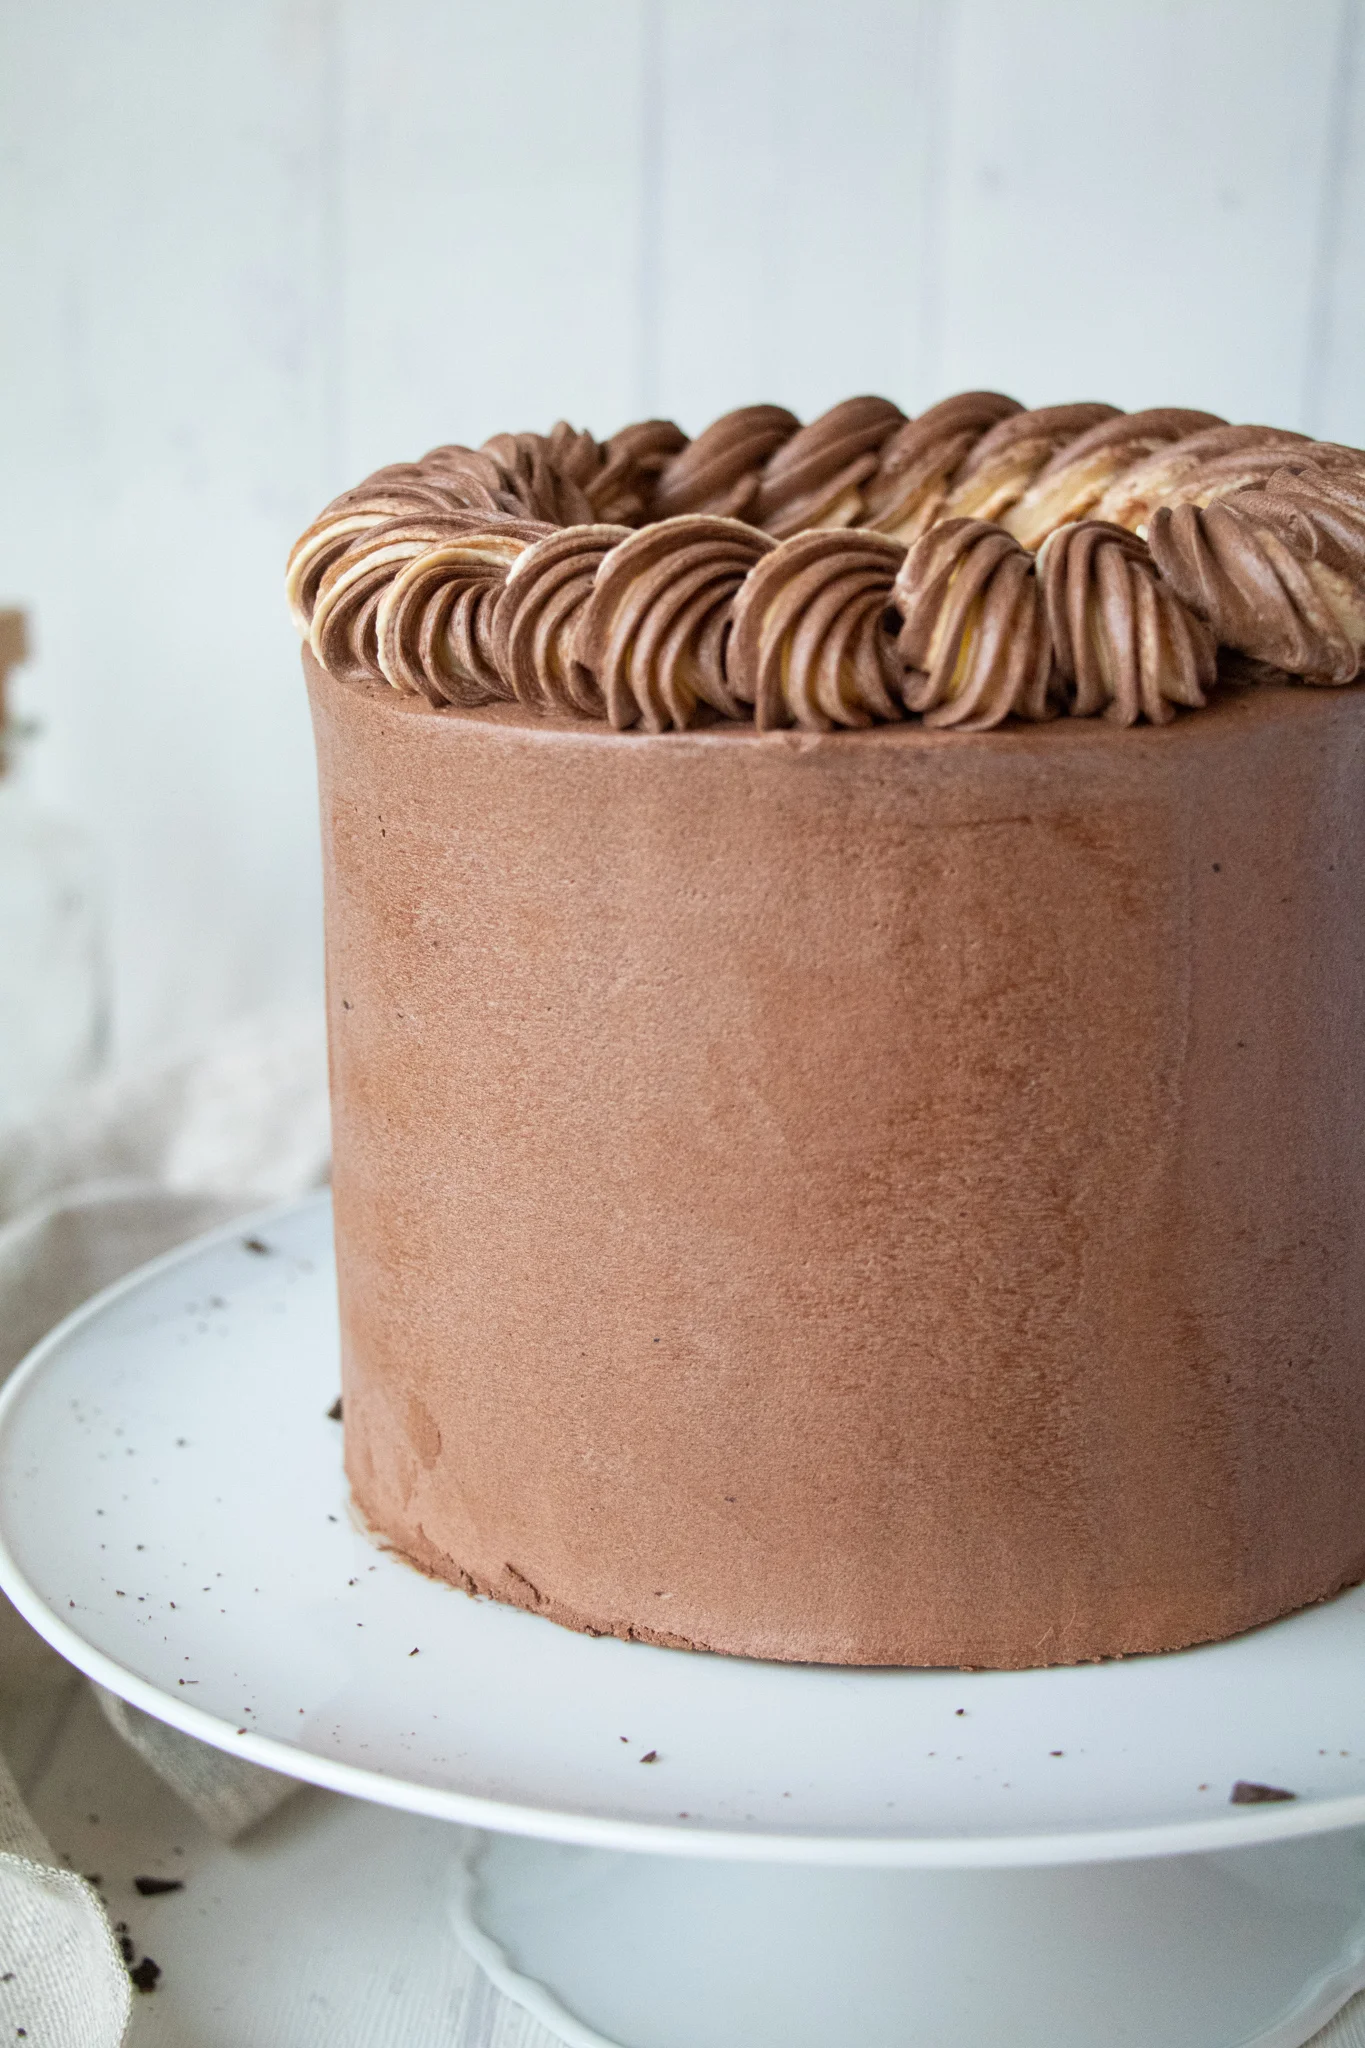 Moist-chocolate-cake-homemade-coucoucake5